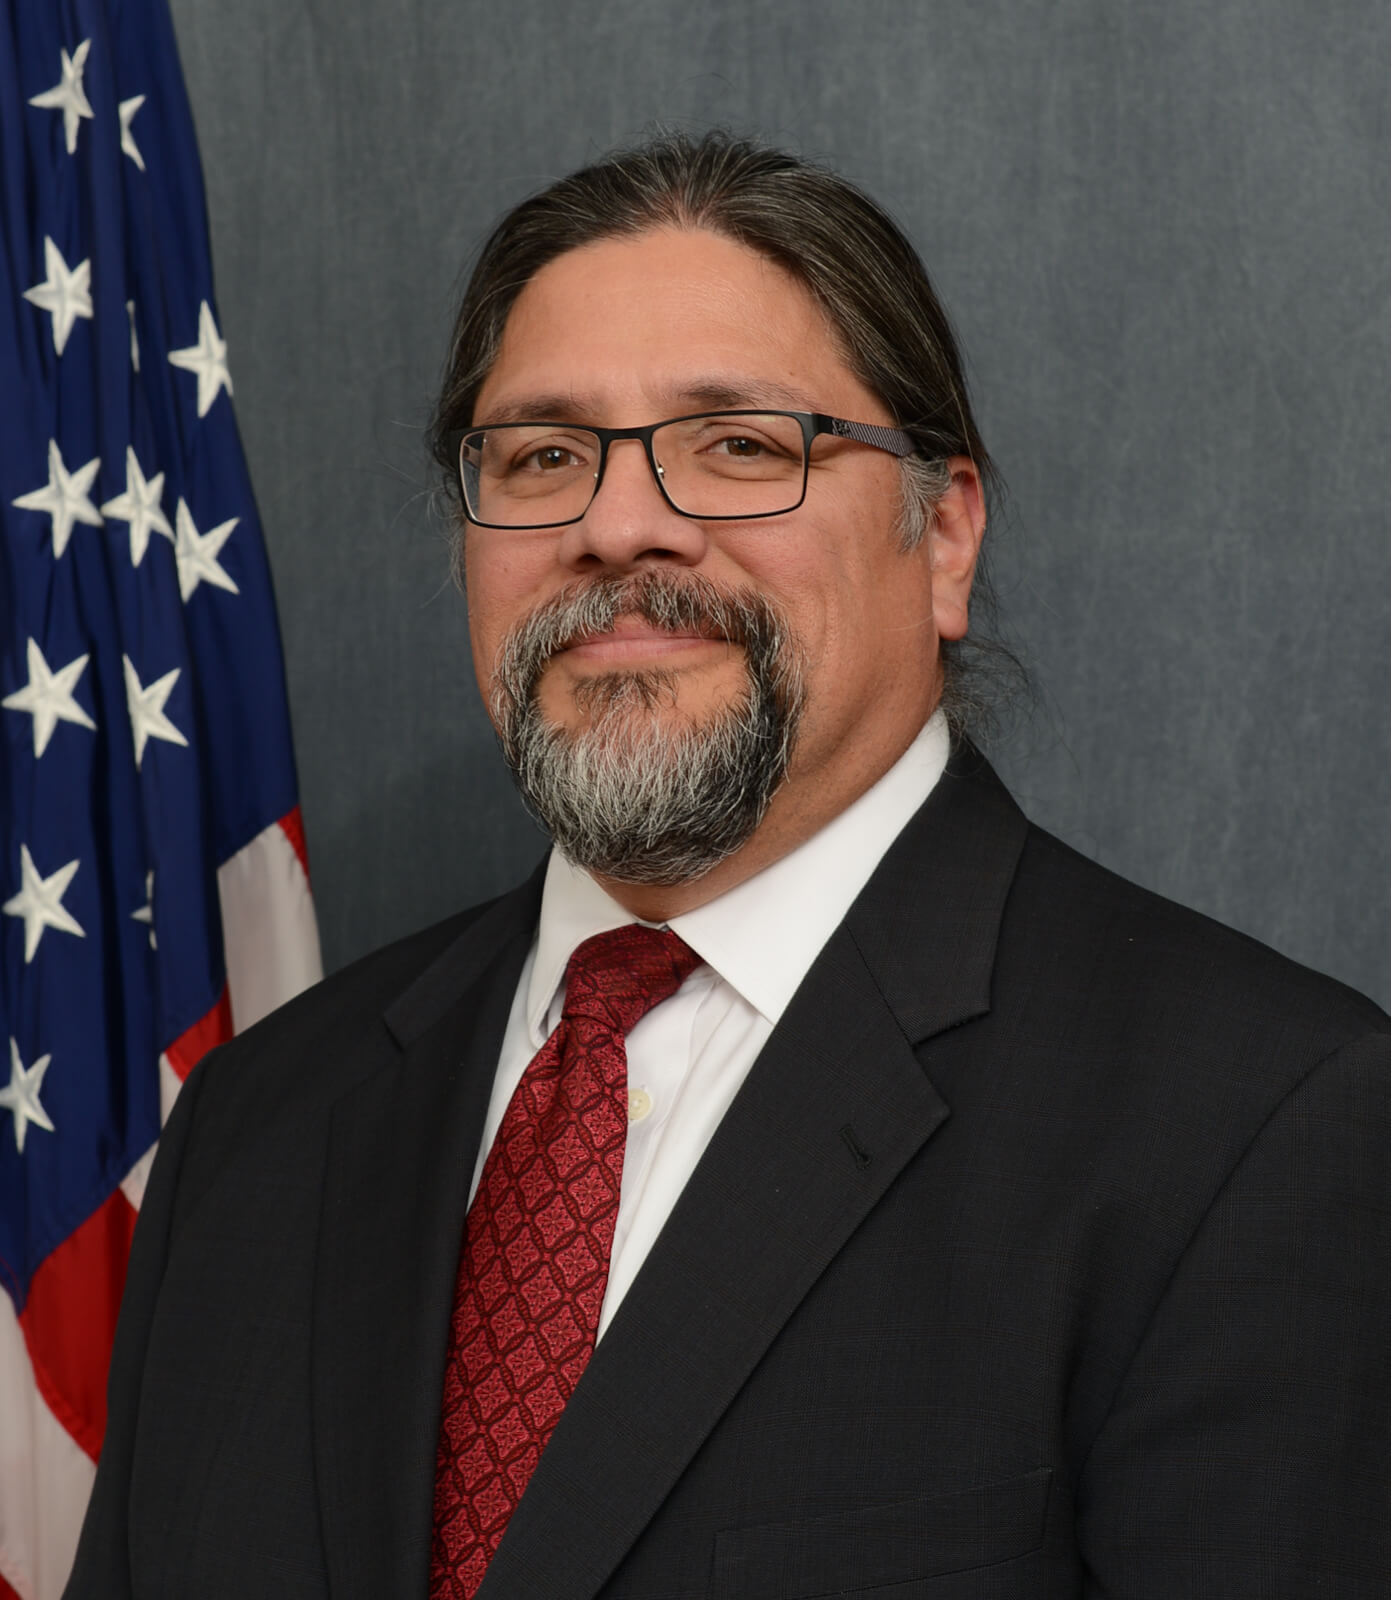 Principal Deputy Assistant Secretary for Indian Affairs John Tahsuda III